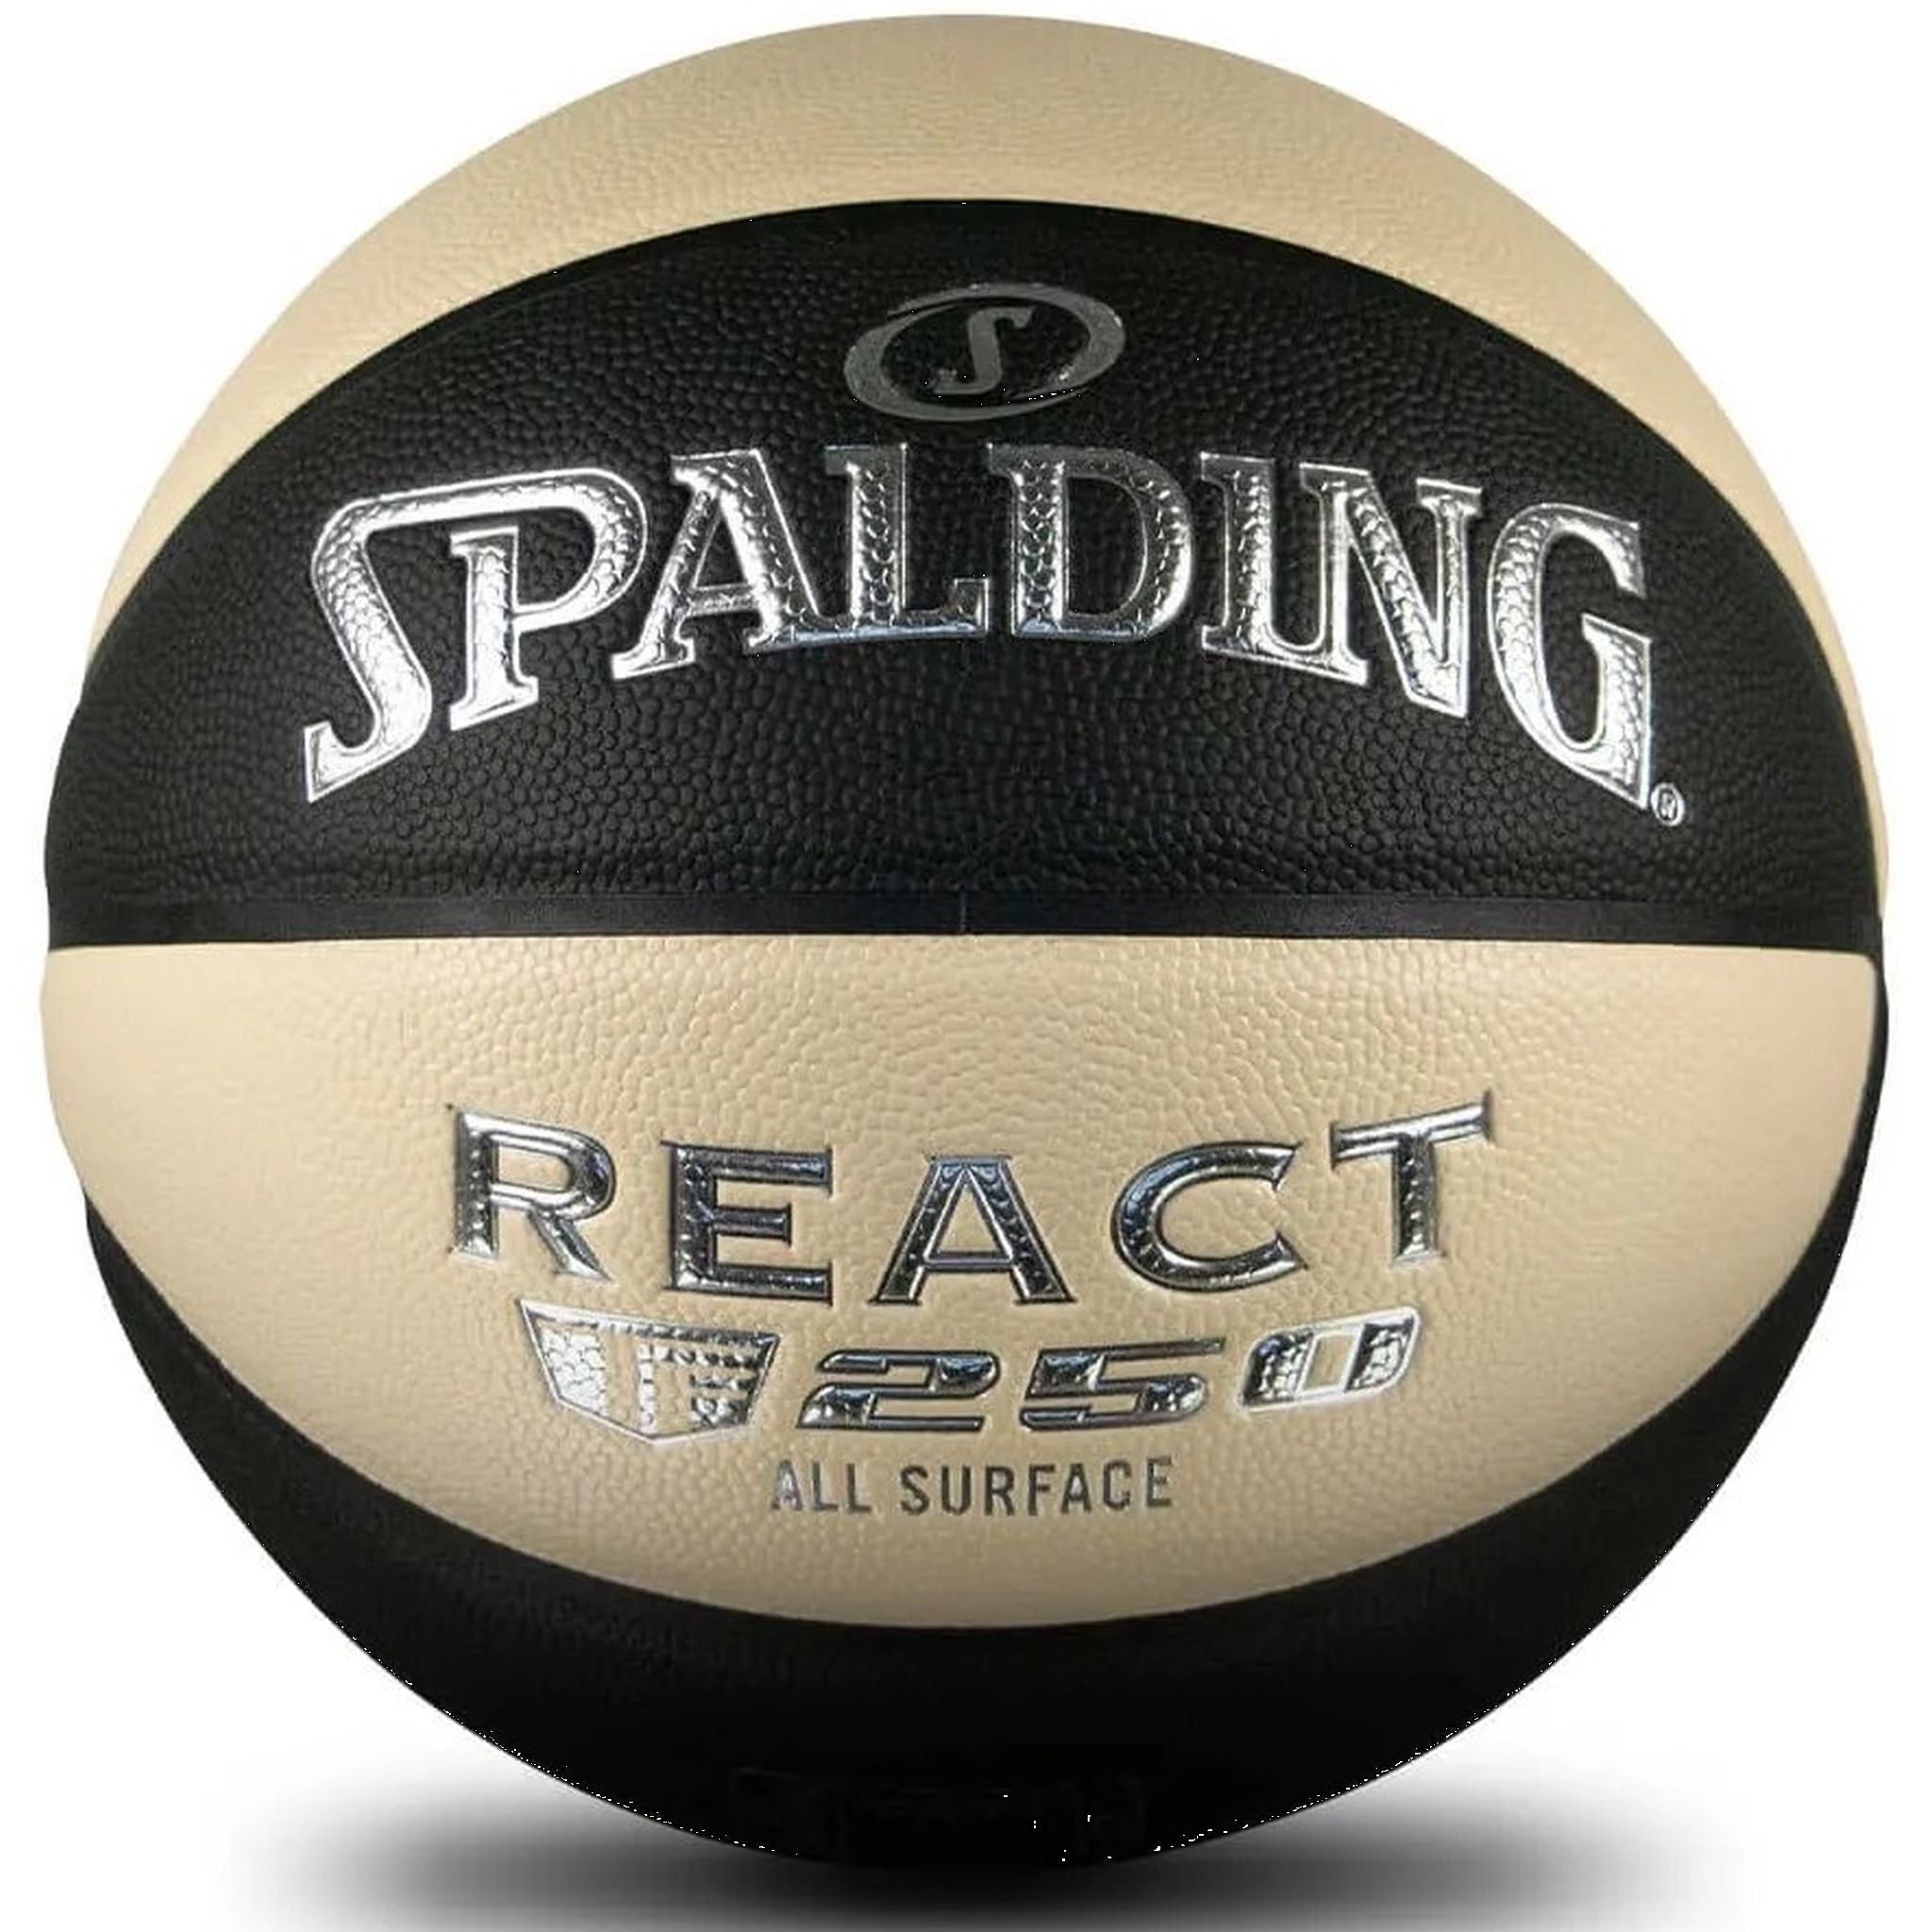 Spalding TF-250 React Basketball